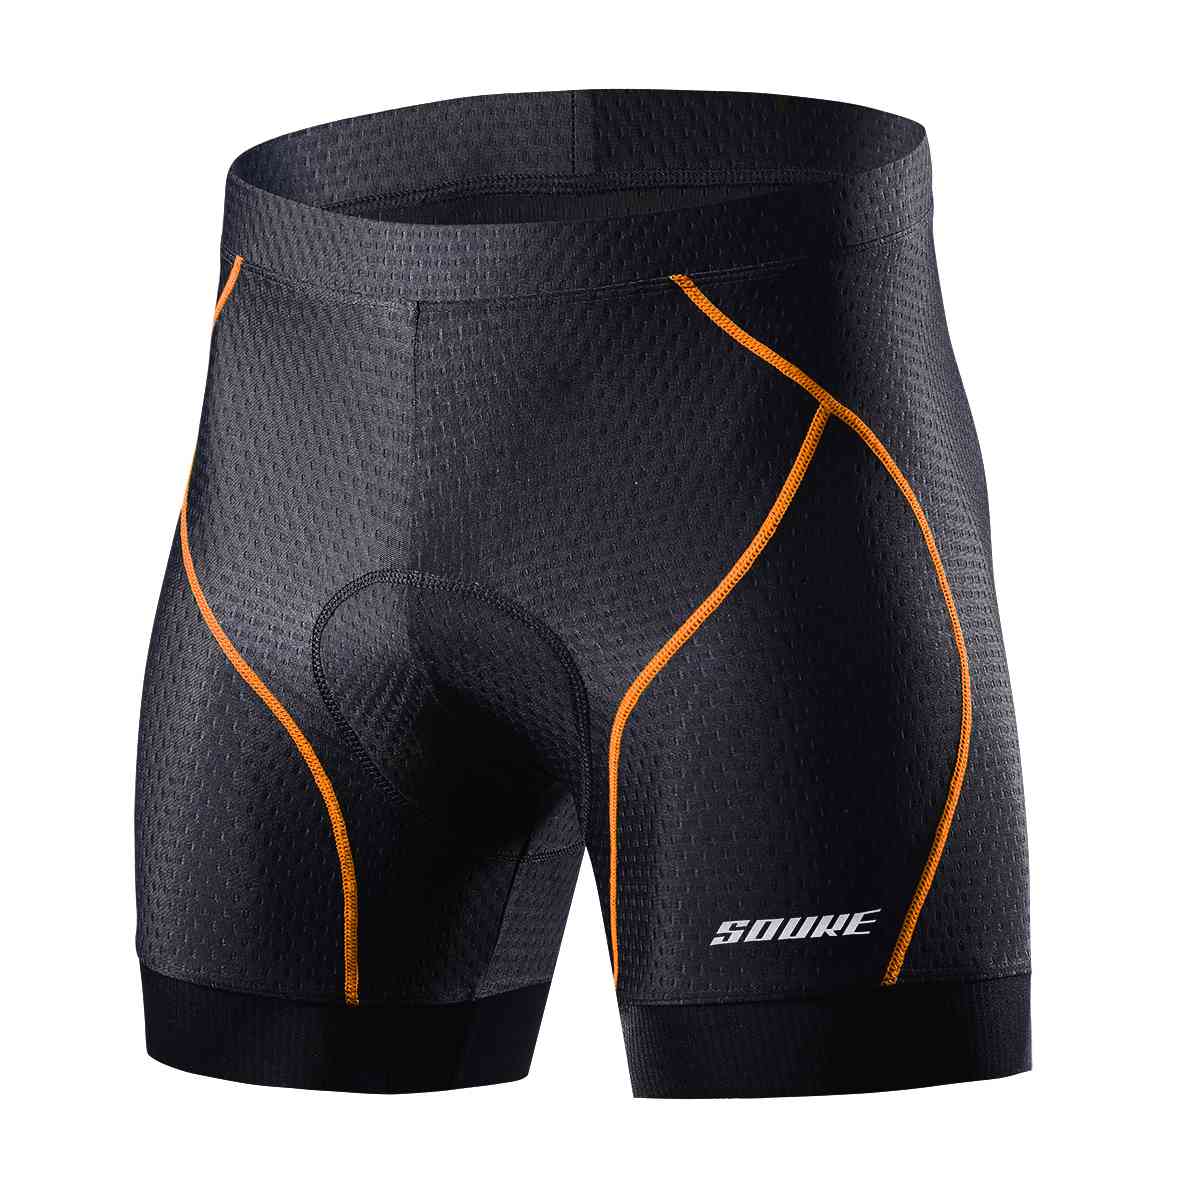 Cycling Pants Padded Underwear Bike Shorts